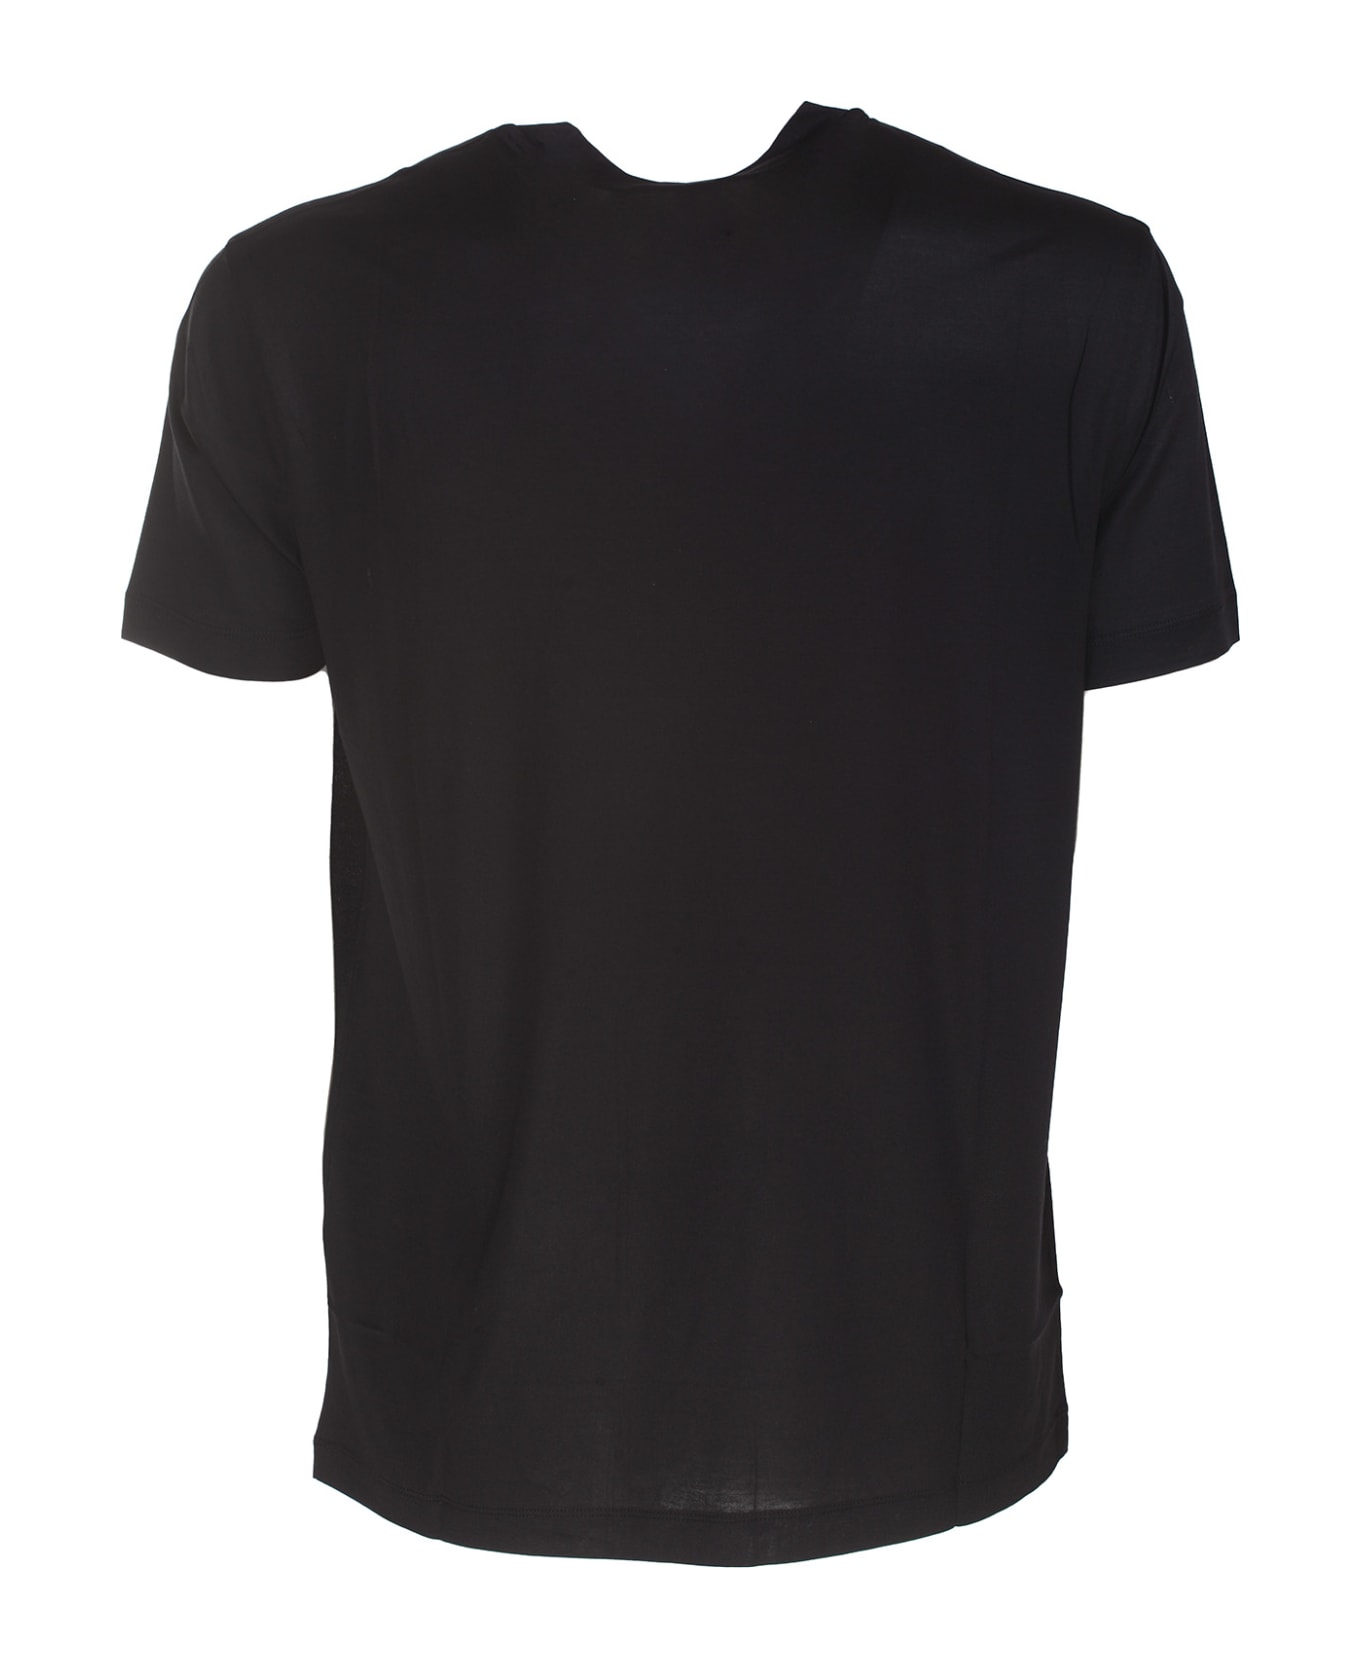 Emporio Armani T-shirts And Polos Black - Black